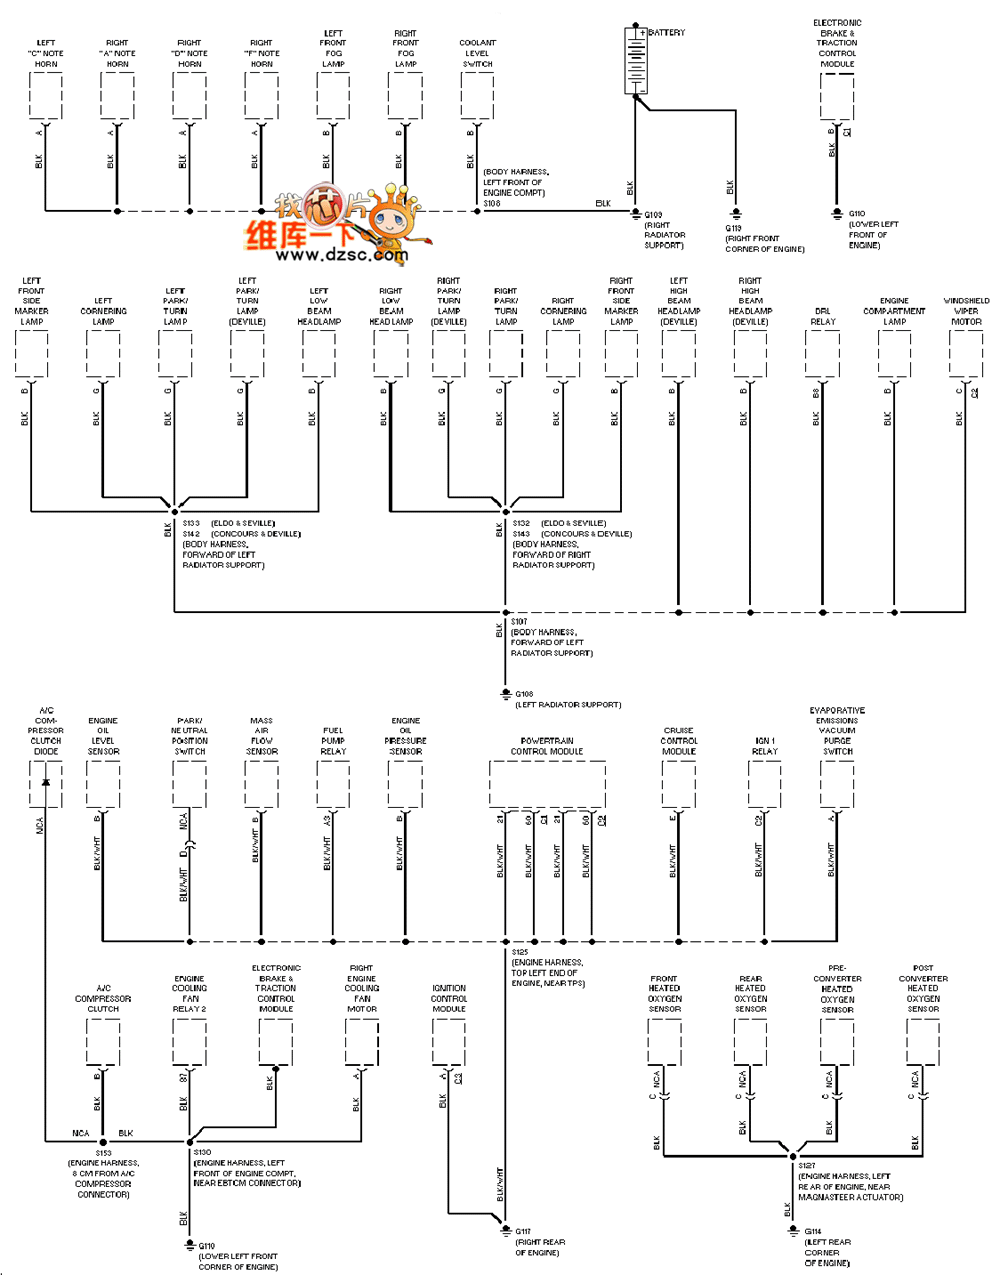 Cadillac deville ground distribution circuit diagram 1